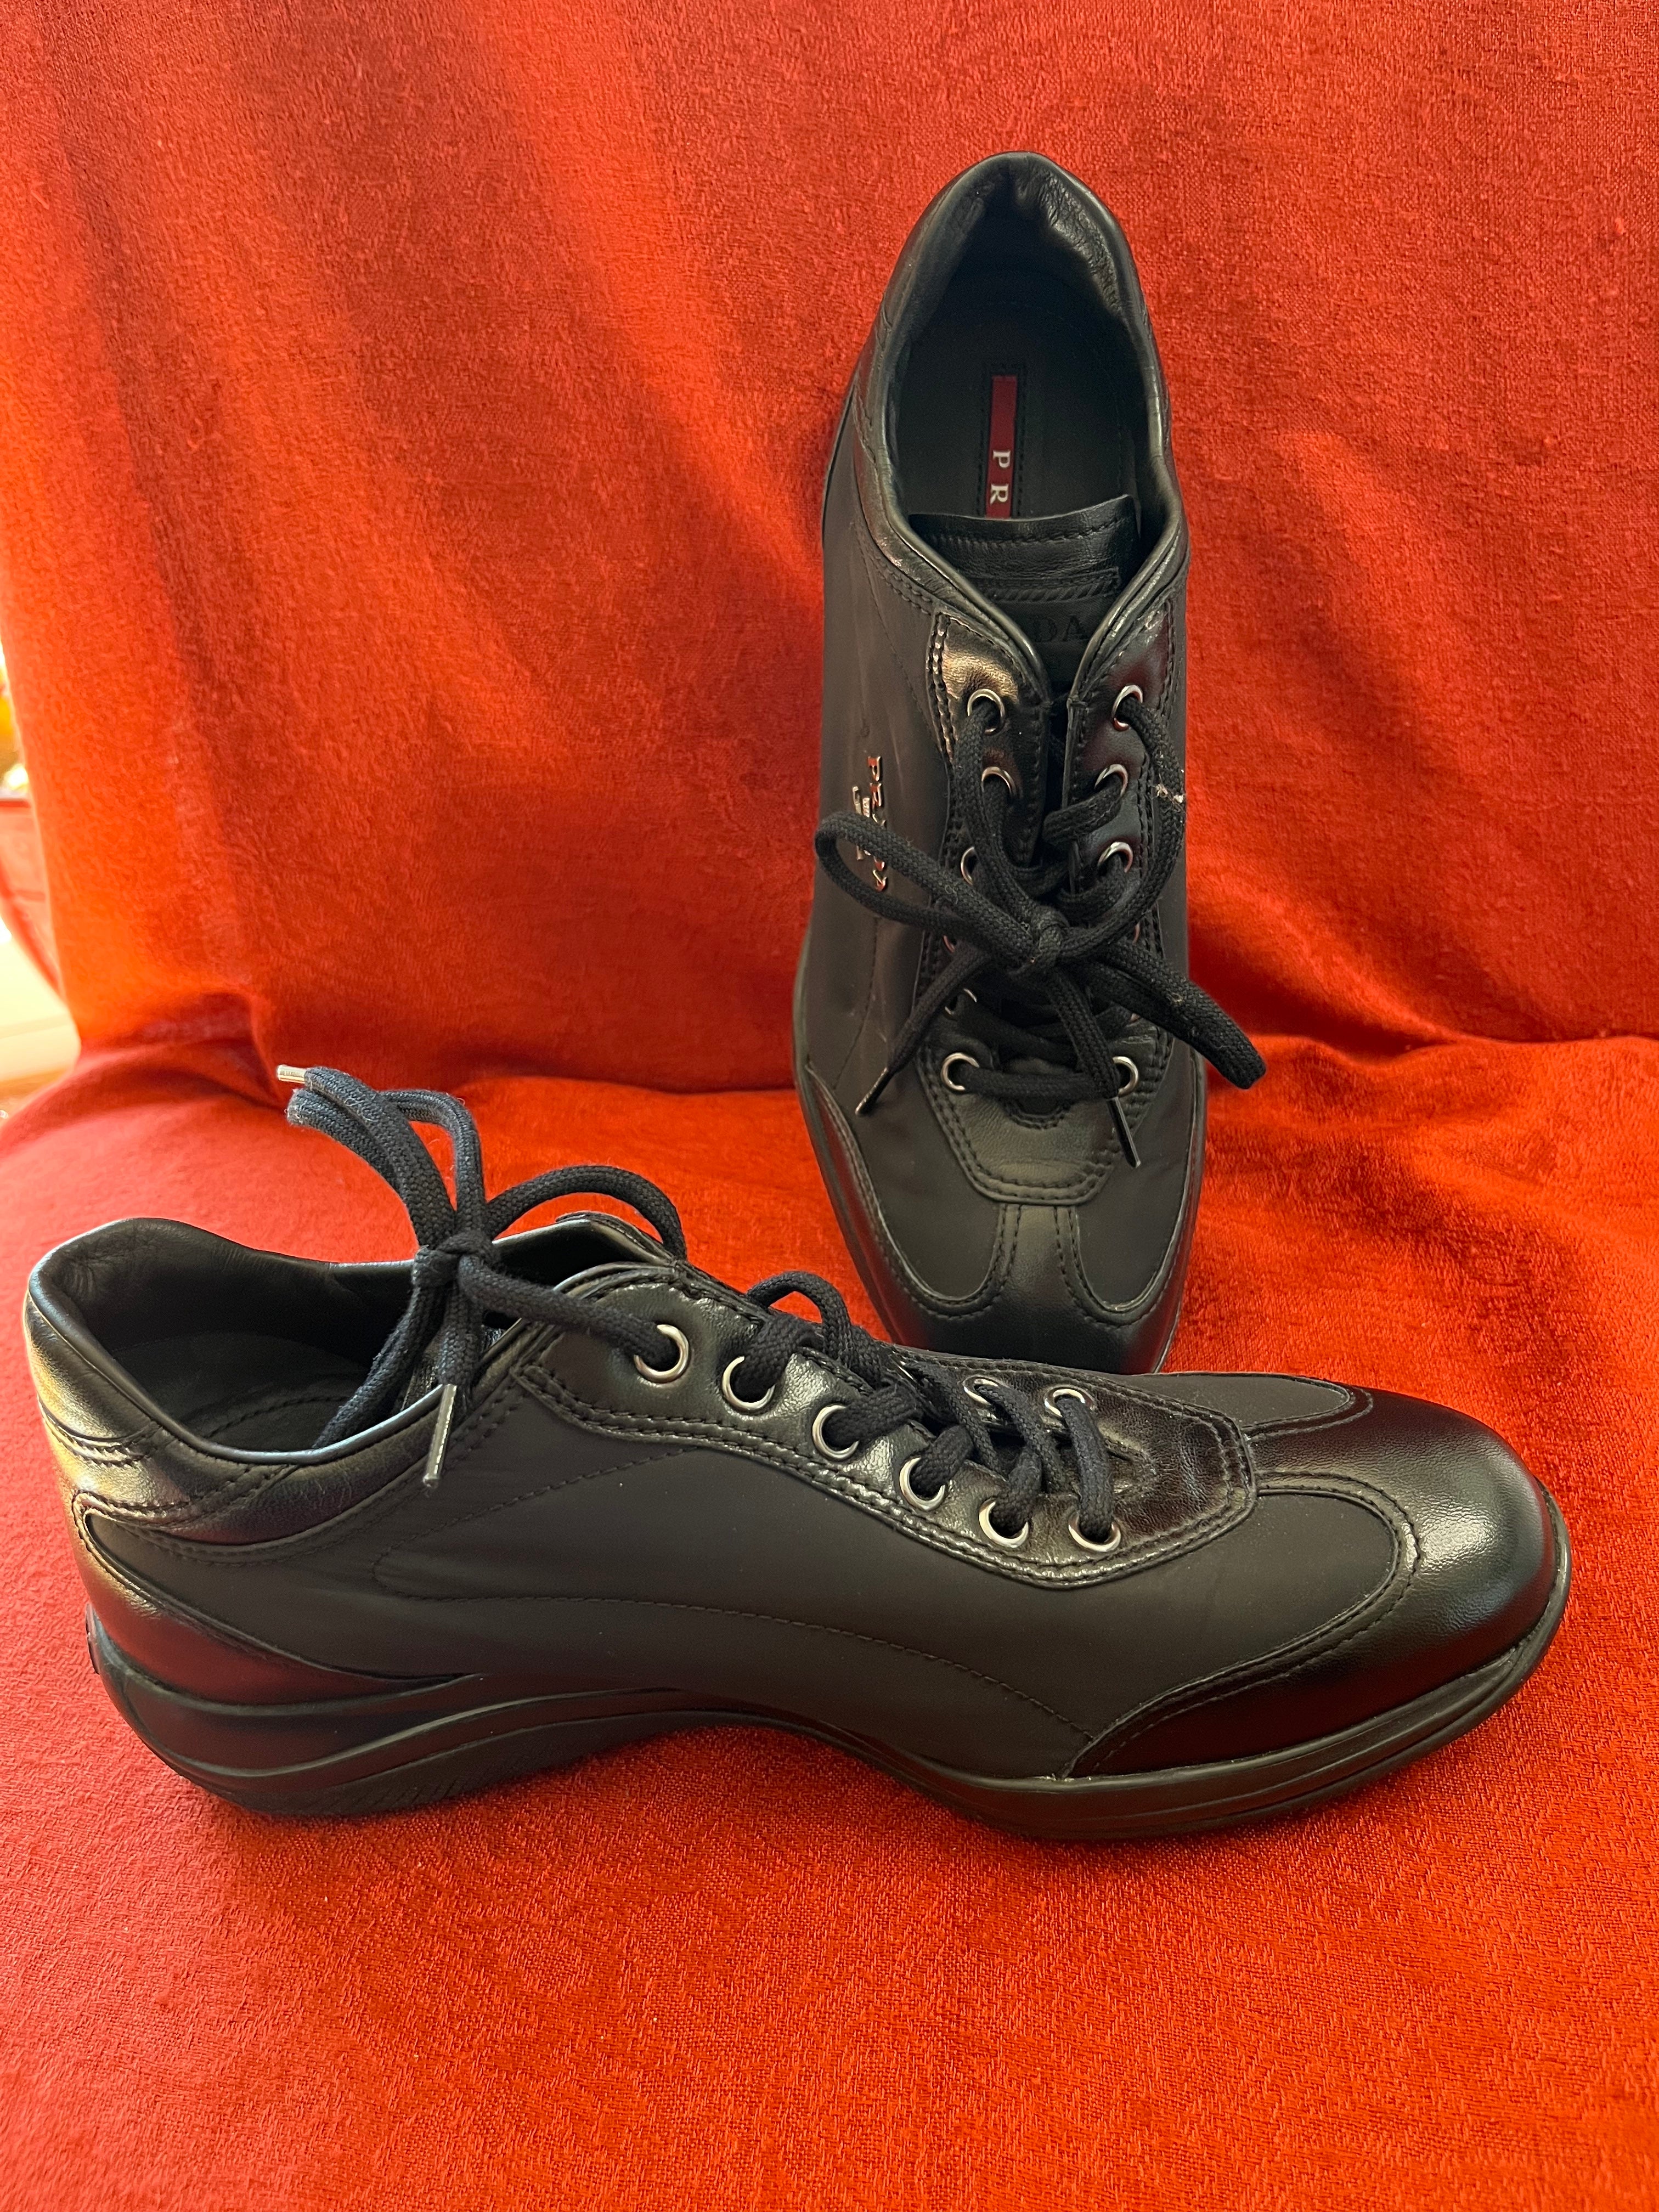 Prada Nylon Sneakers with Saffiano Leather Trim Size 37 (6.5 US